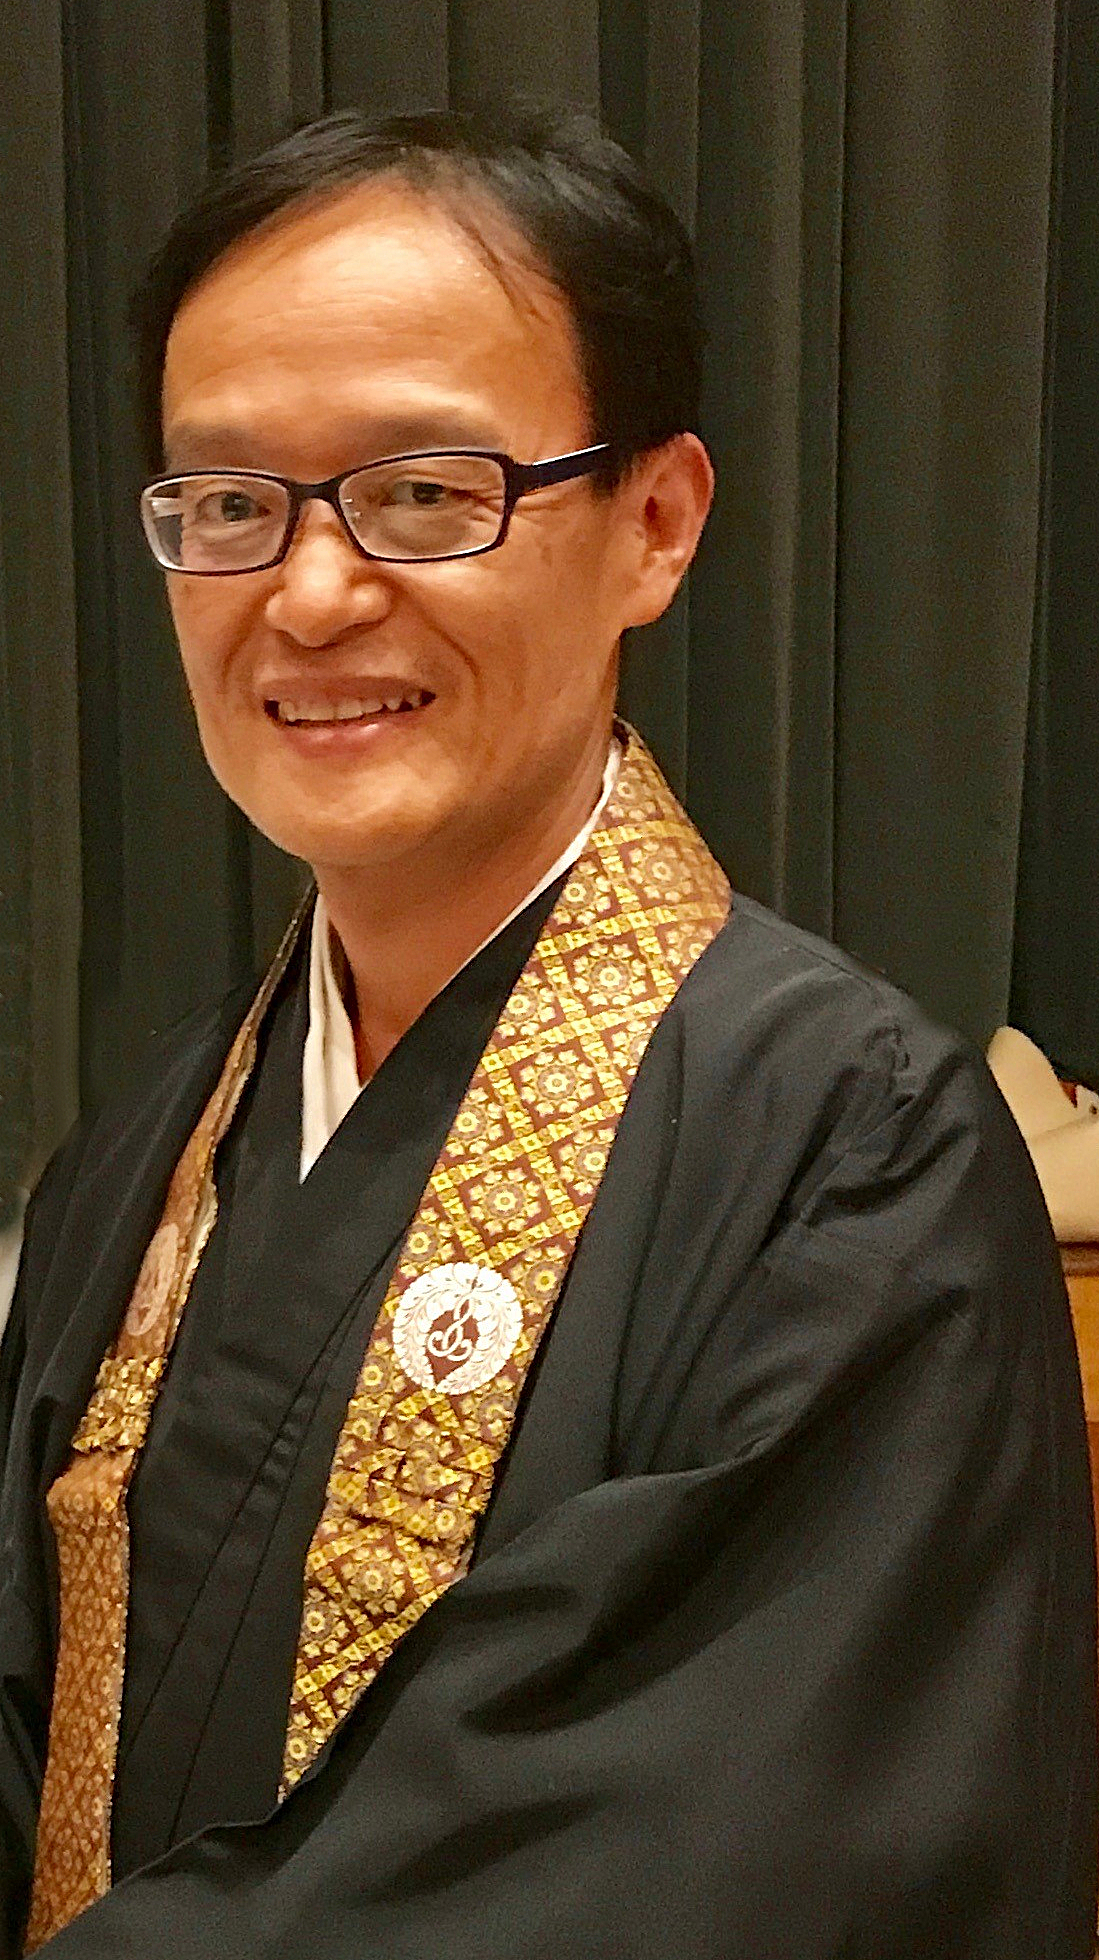 Rev Watanabe